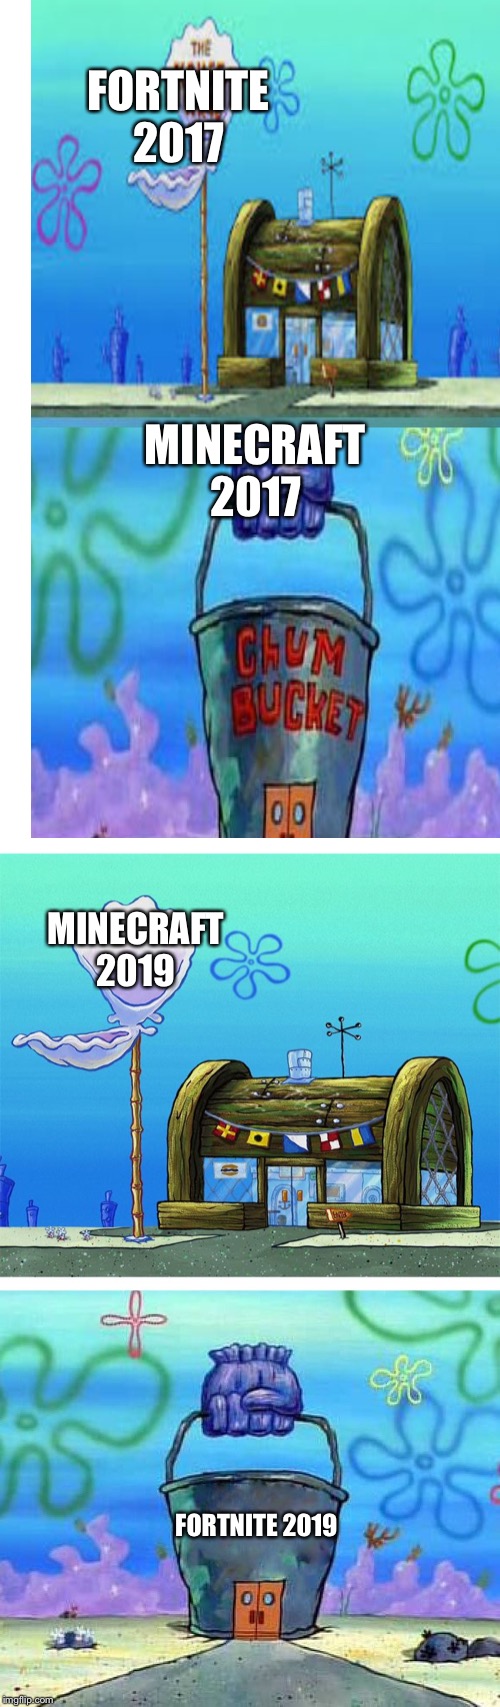 Minecraft Vs Fortnite Meme